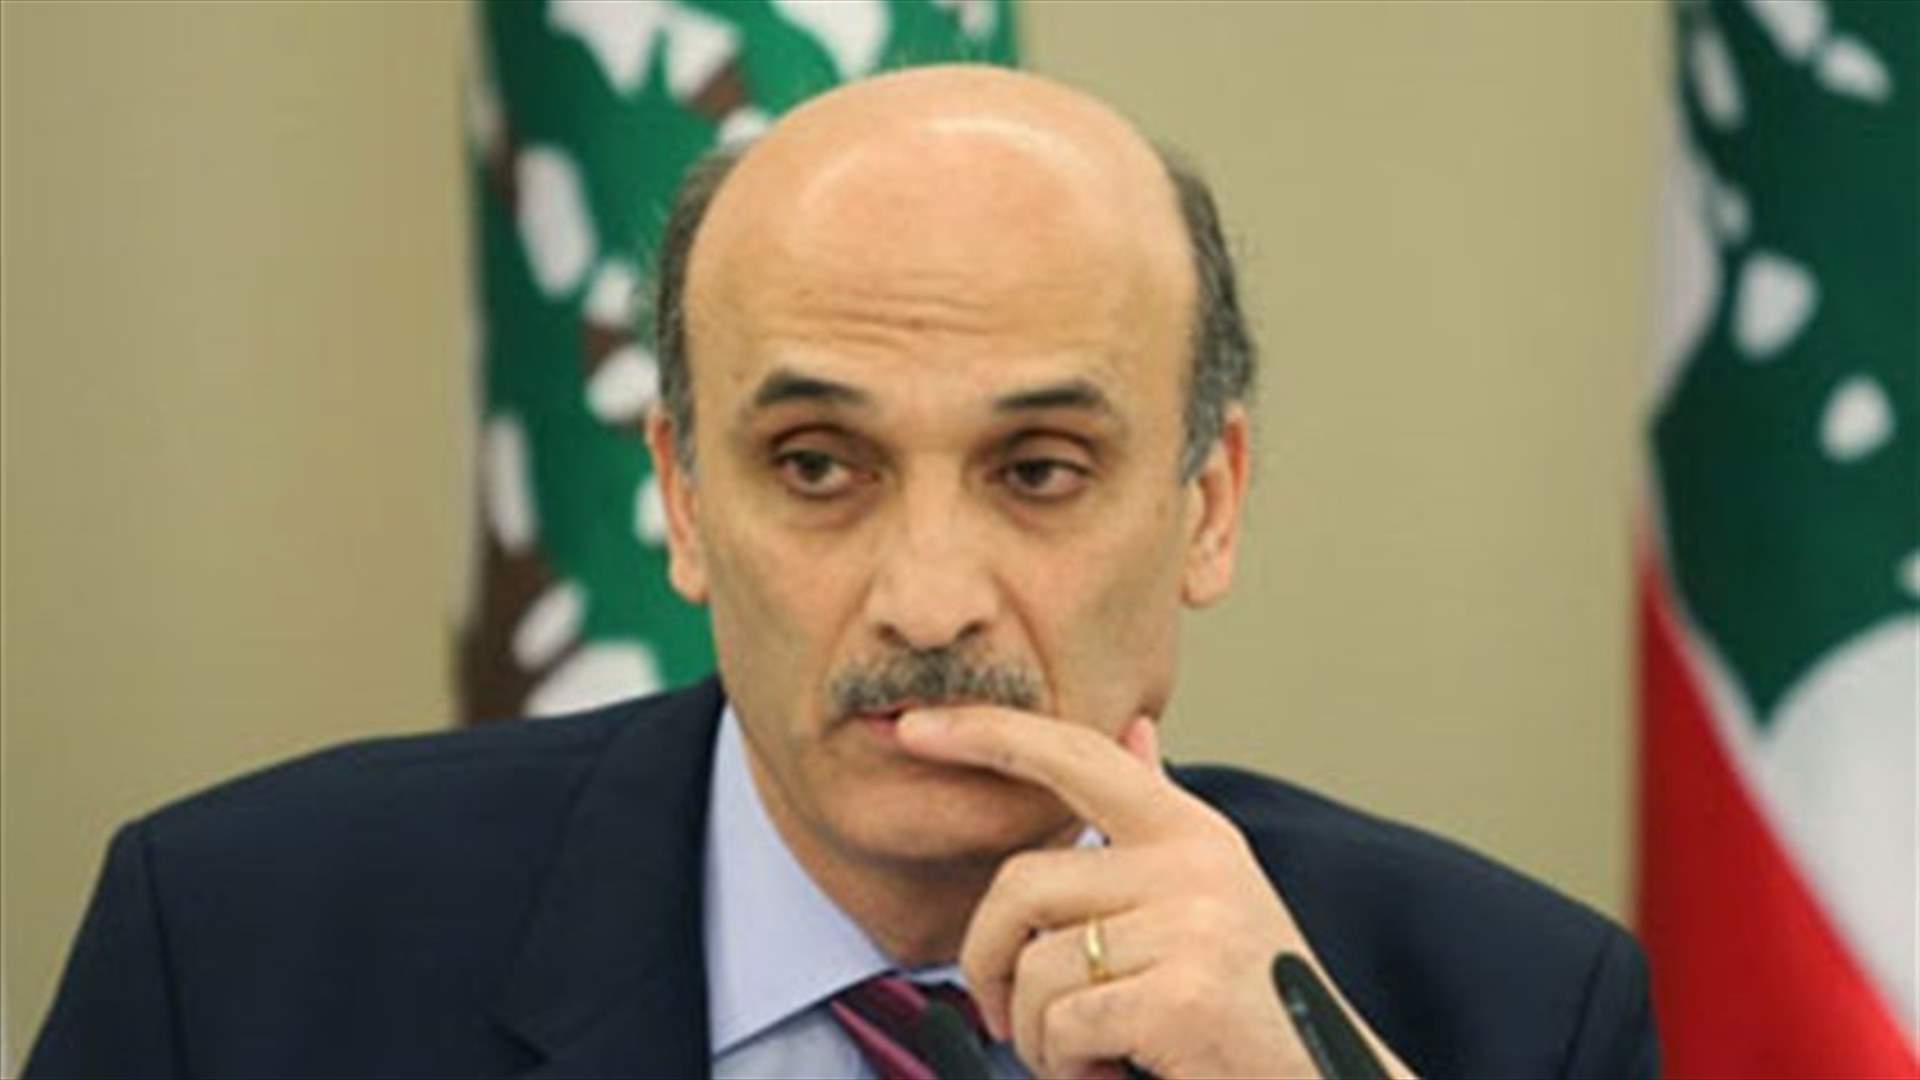 Geagea hails lift ban on Saudi women driving